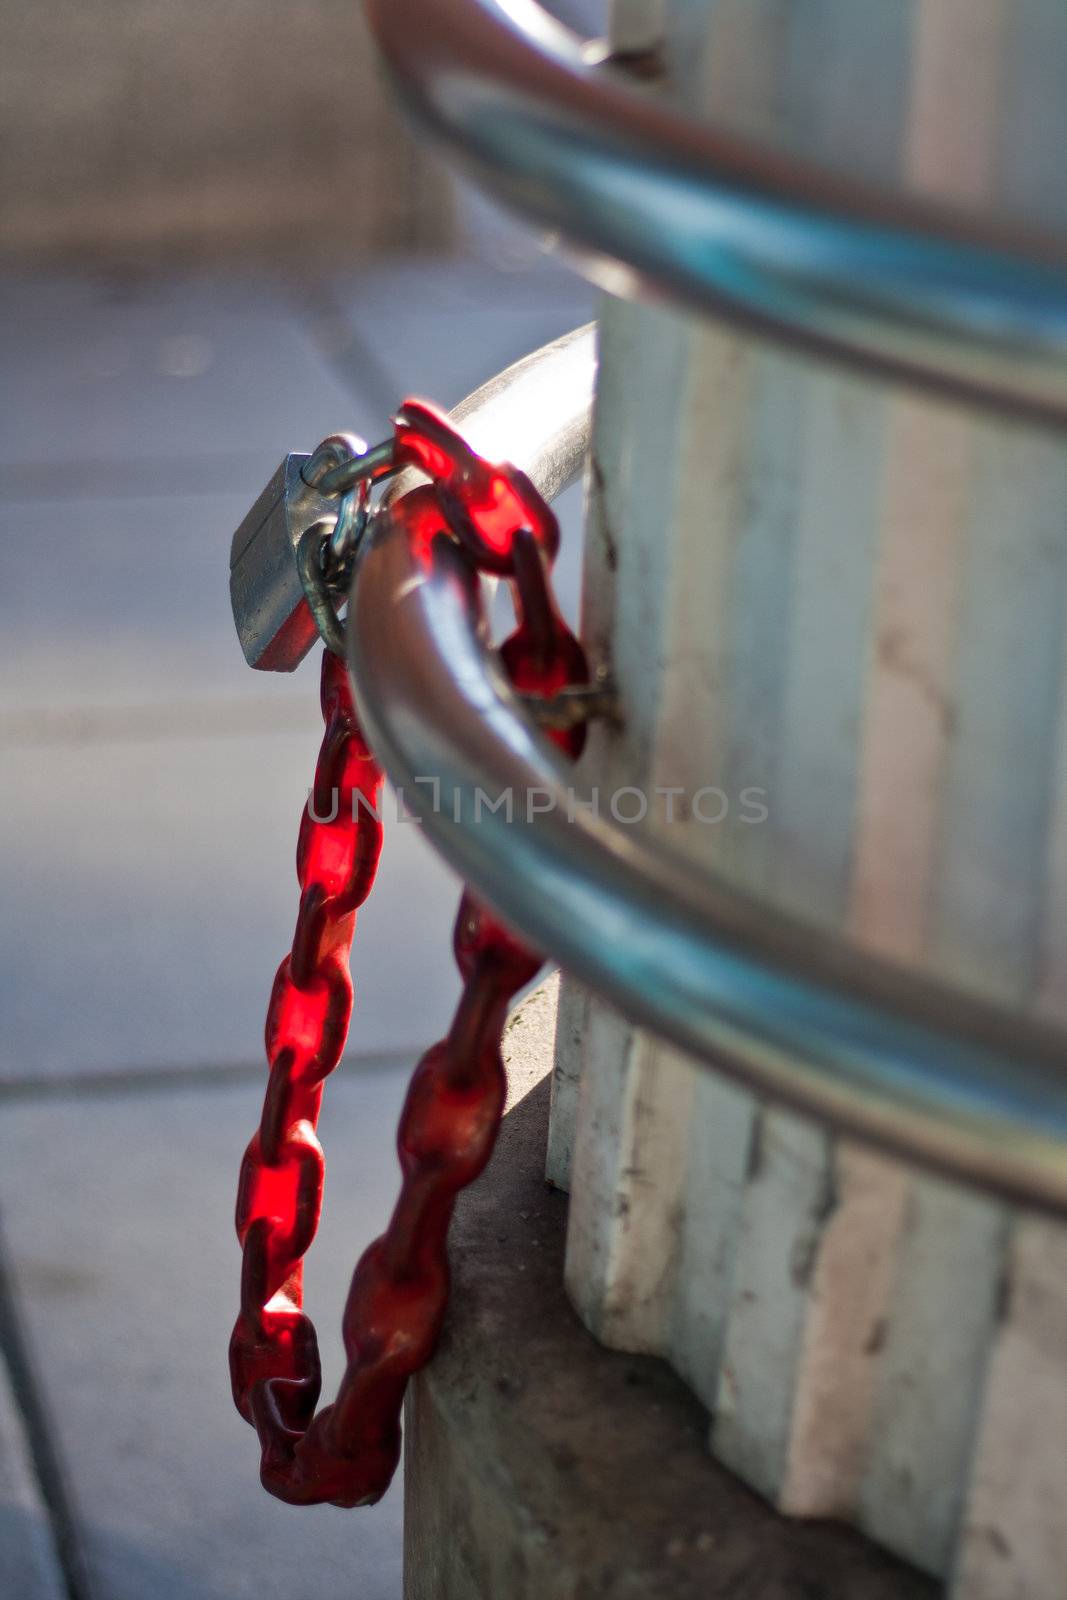 Heavy duty metallic bike lock with red coated chain hangin on it.